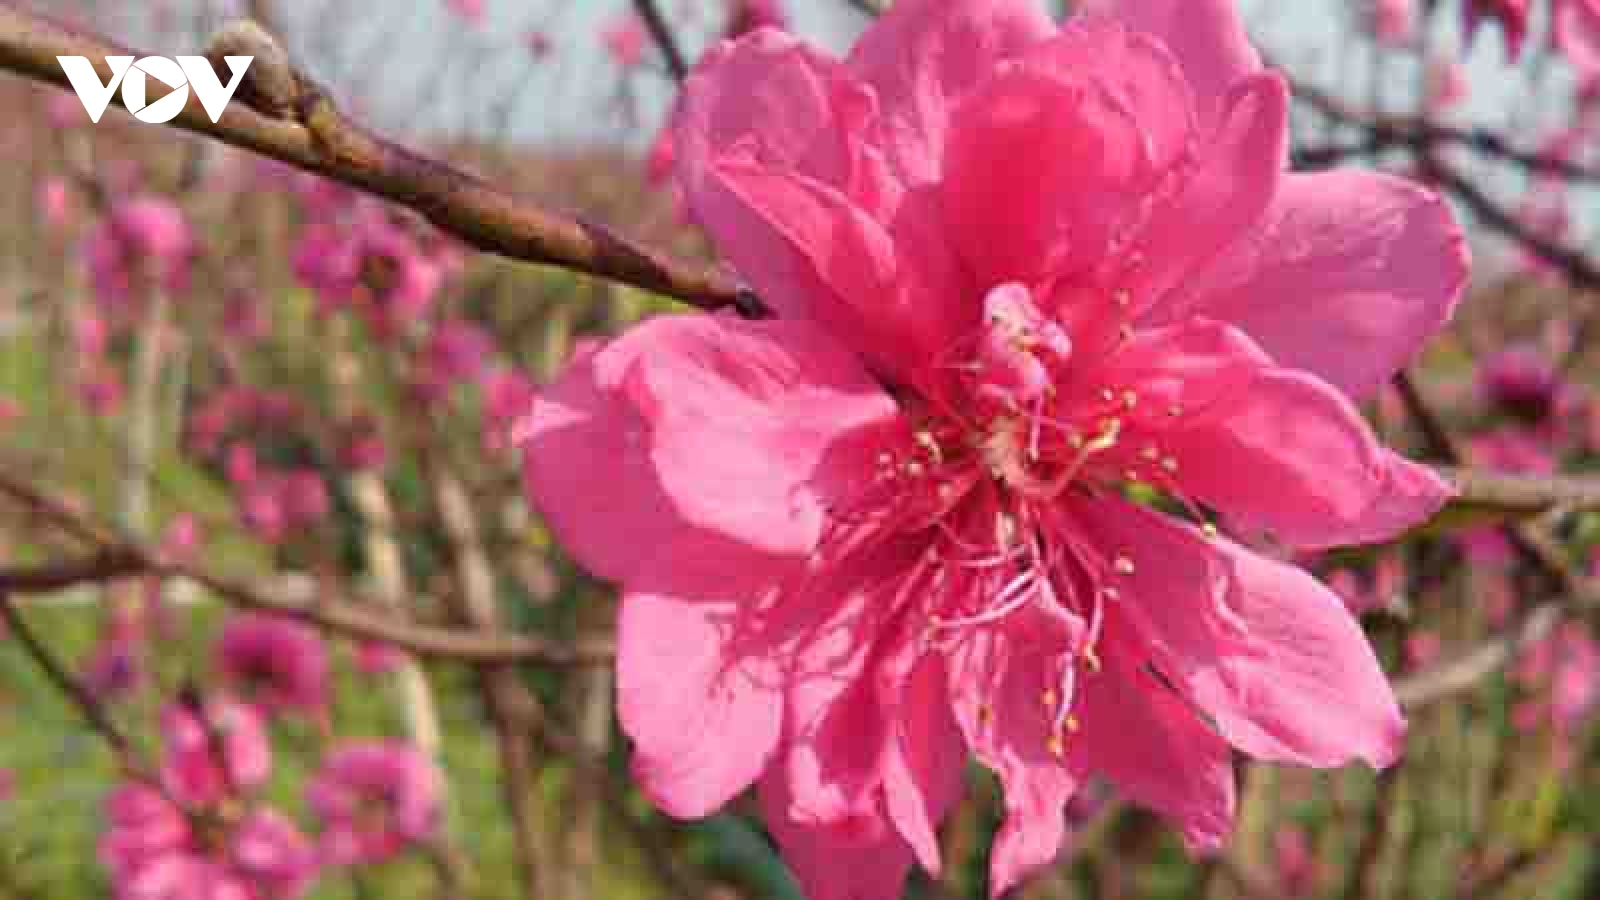 Nhat Tan peach blossoms in full bloom ahead of Tet